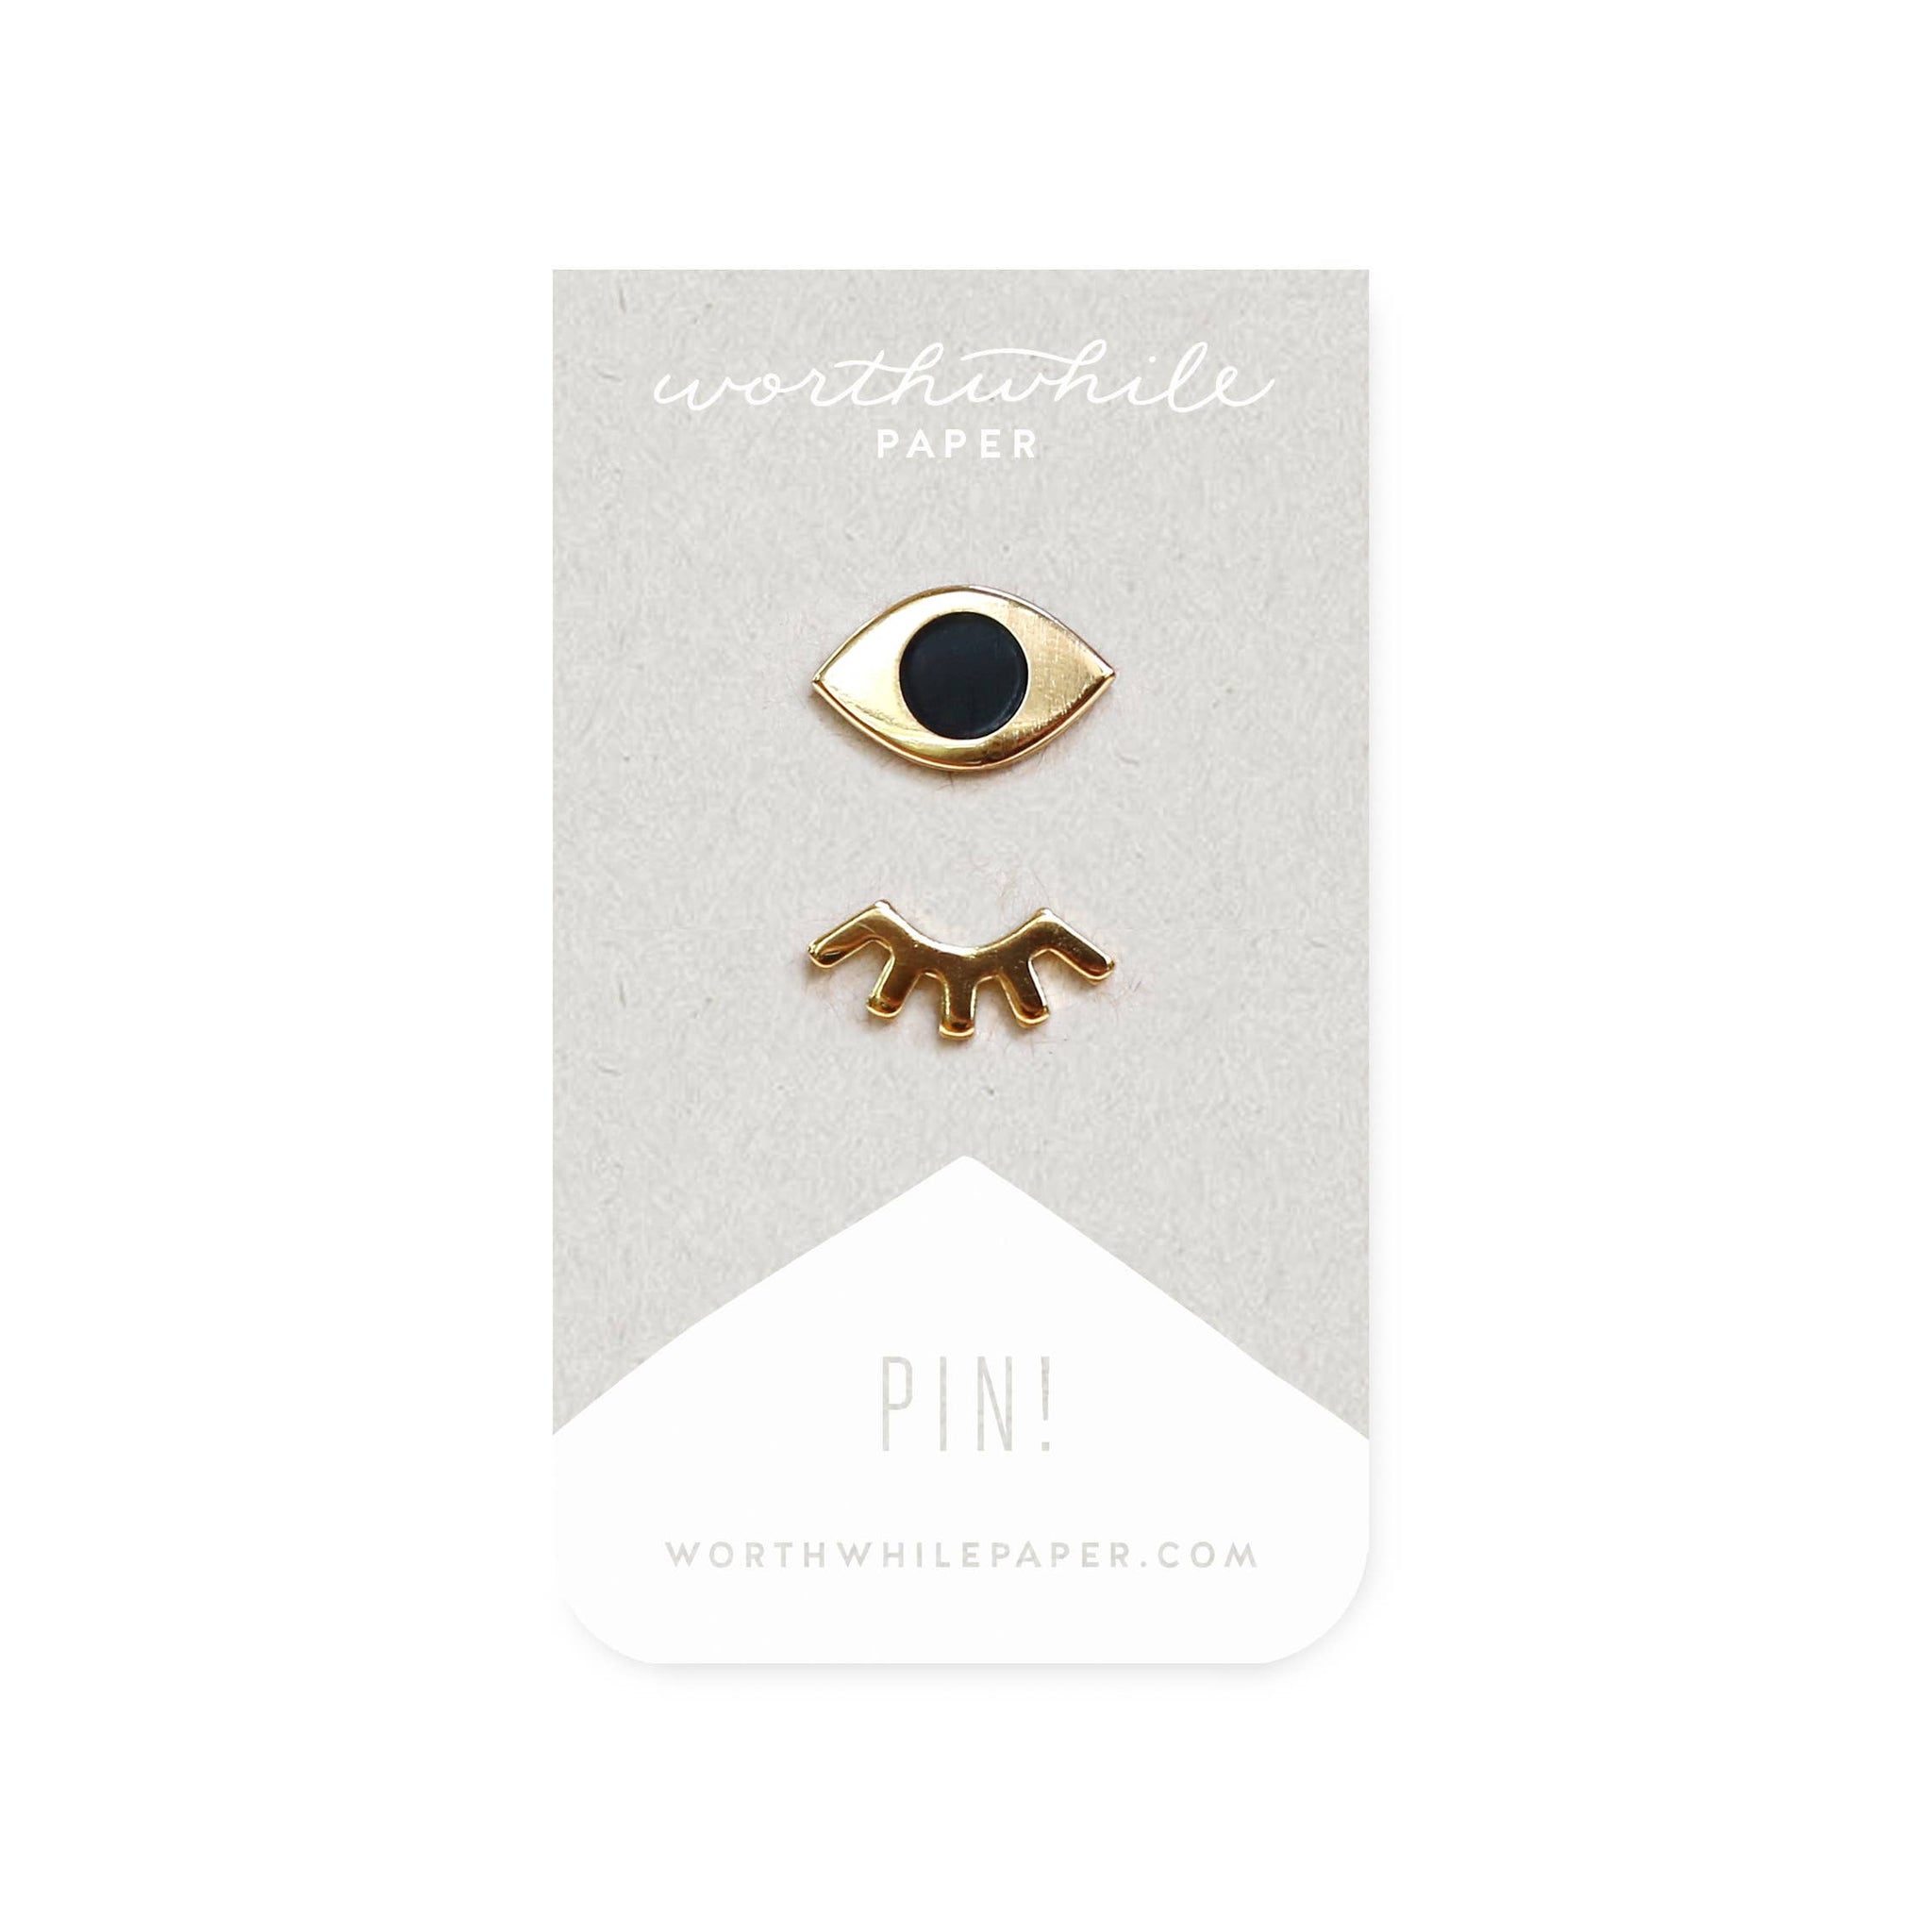 Worthwhile Paper - Winky Eyes Enamel Pin Set